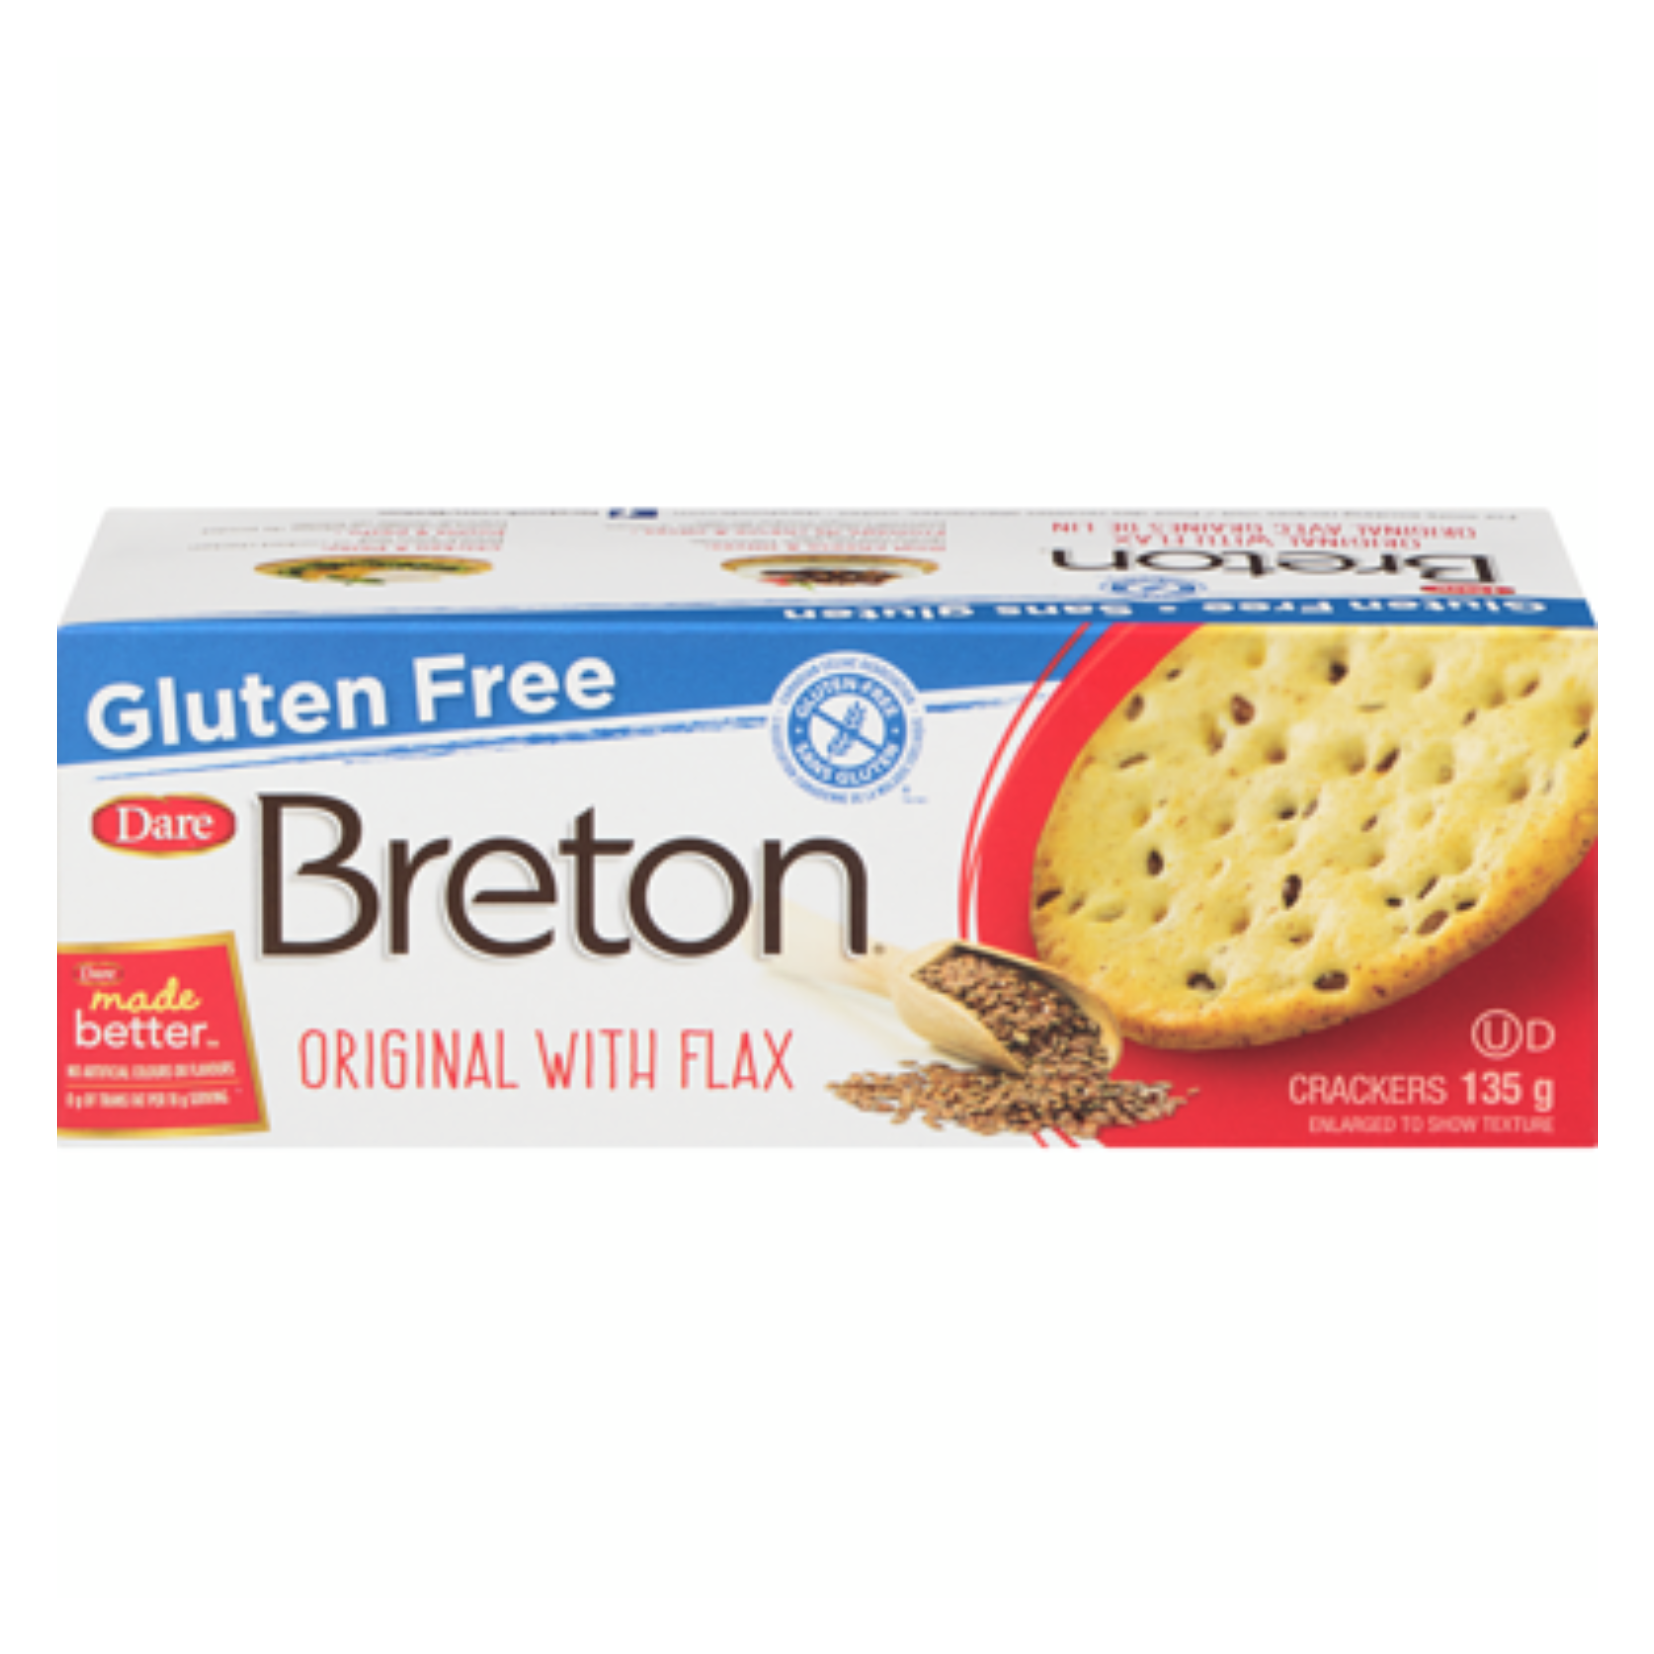 Dare Breton Gluten Free Original with Flax Crackers 135g